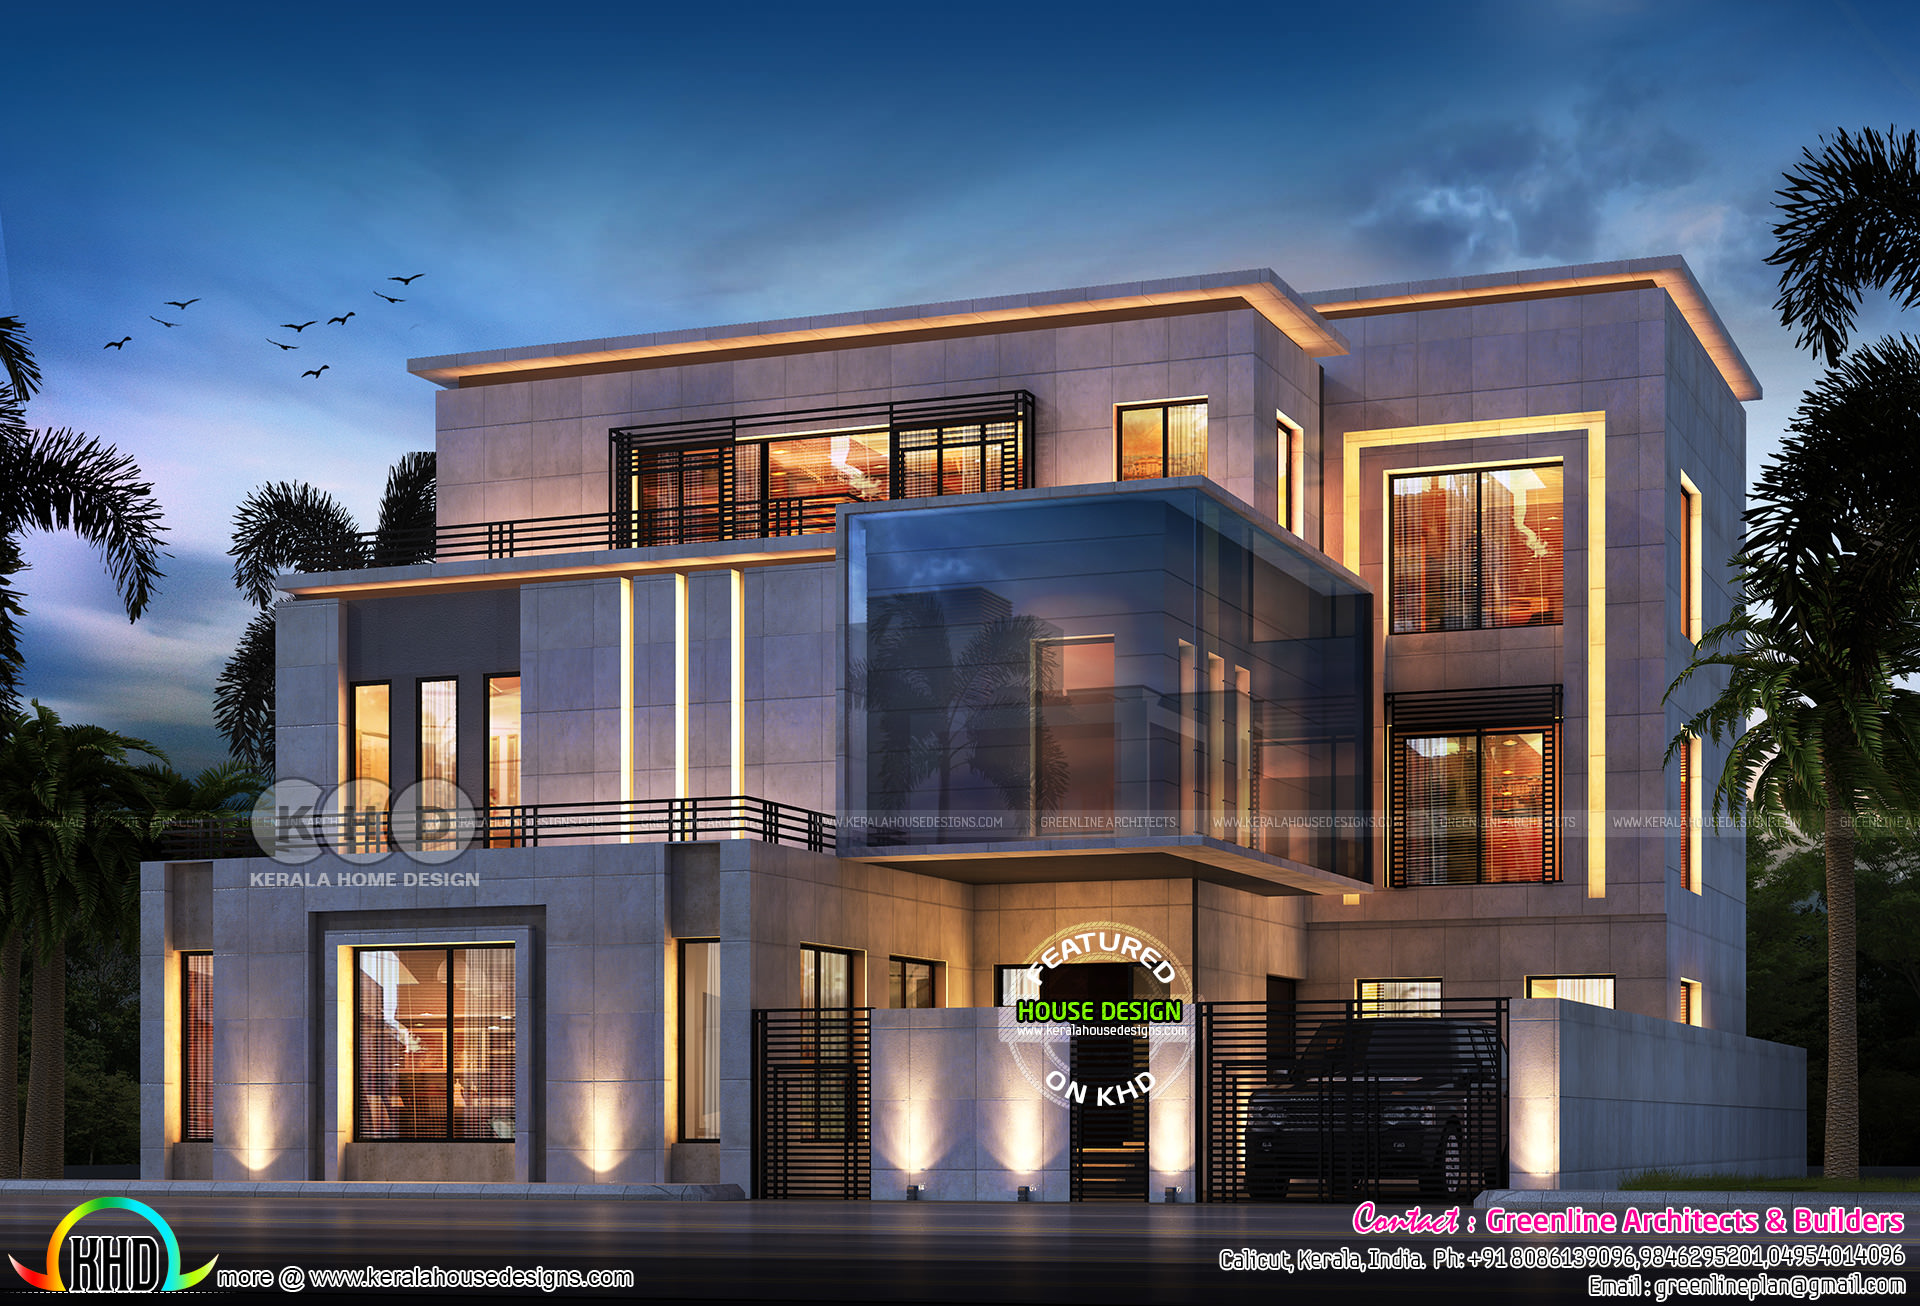  7  bedroom  contemporary home  design plan  Kerala home  